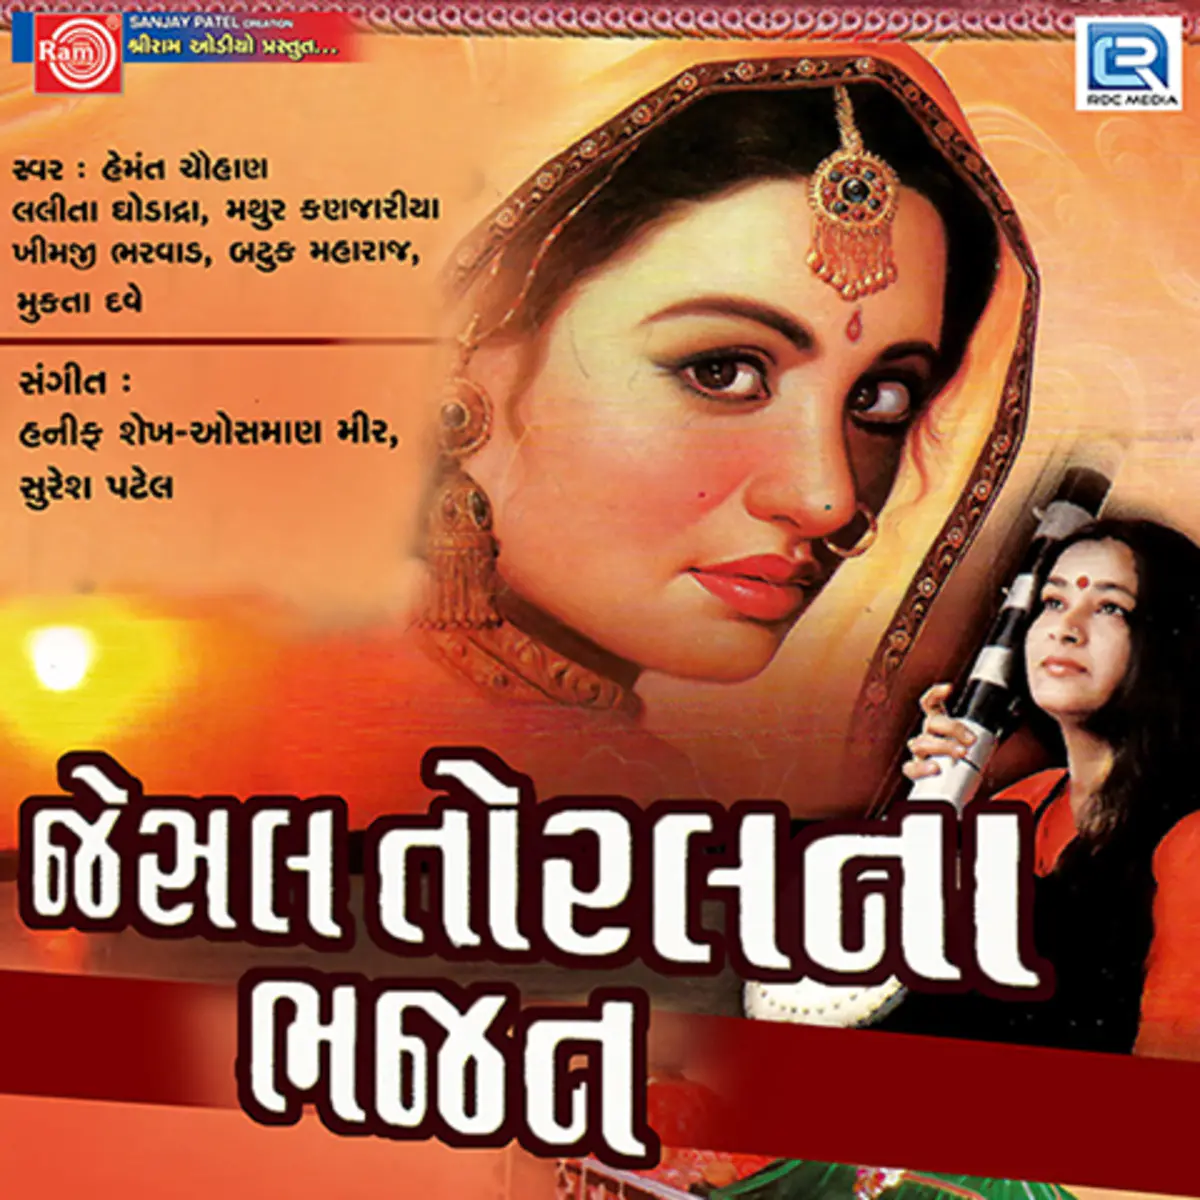 Jesal Toral Na Bhajan Songs Download Jesal Toral Na Bhajan Mp3 Gujarati Songs Online Free On Gaana Com Mara payal ni chhuti dor. jesal toral na bhajan songs download